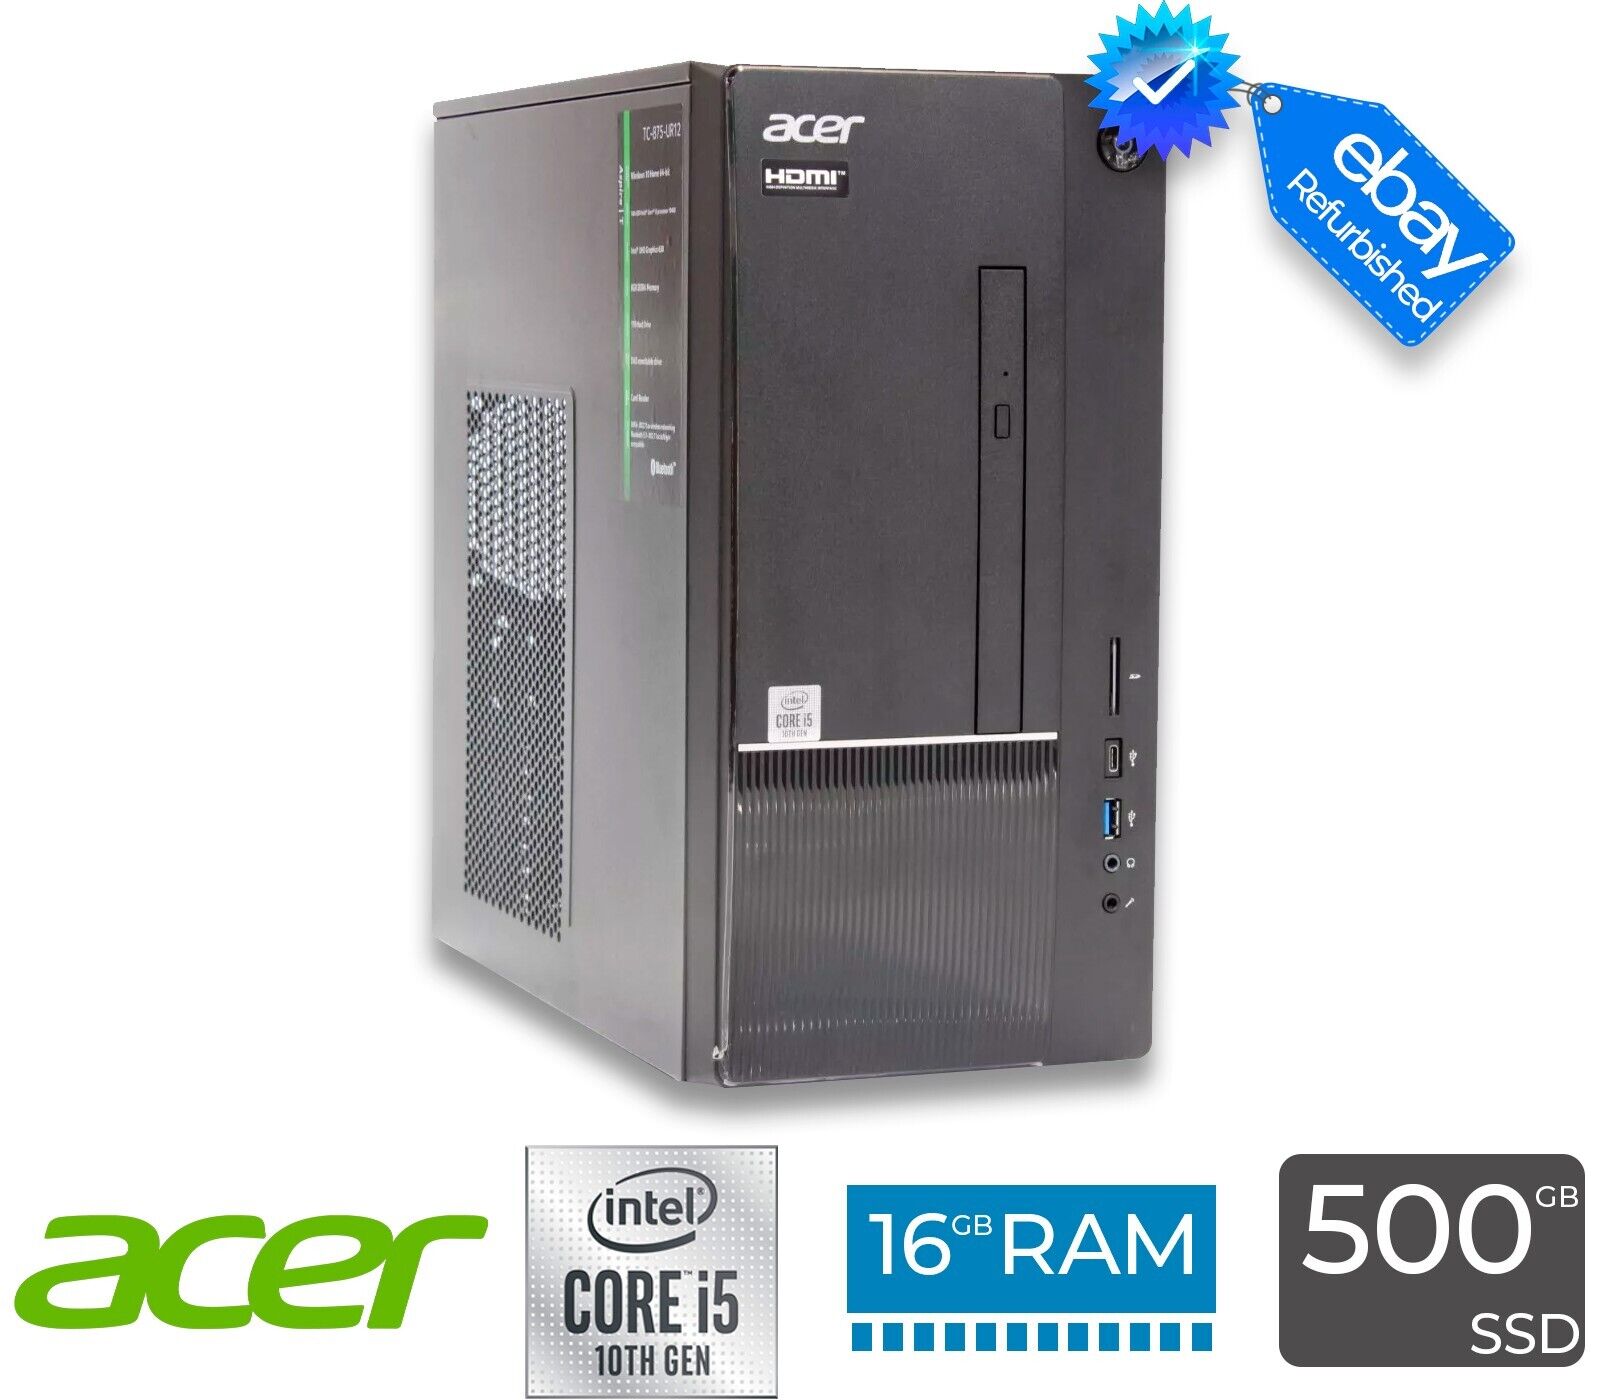 Acer Aspire TC-875 Intel i5-10400 2.8GHz 16 GB RAM 500 GB SSD HDMI USB-C Win 10P